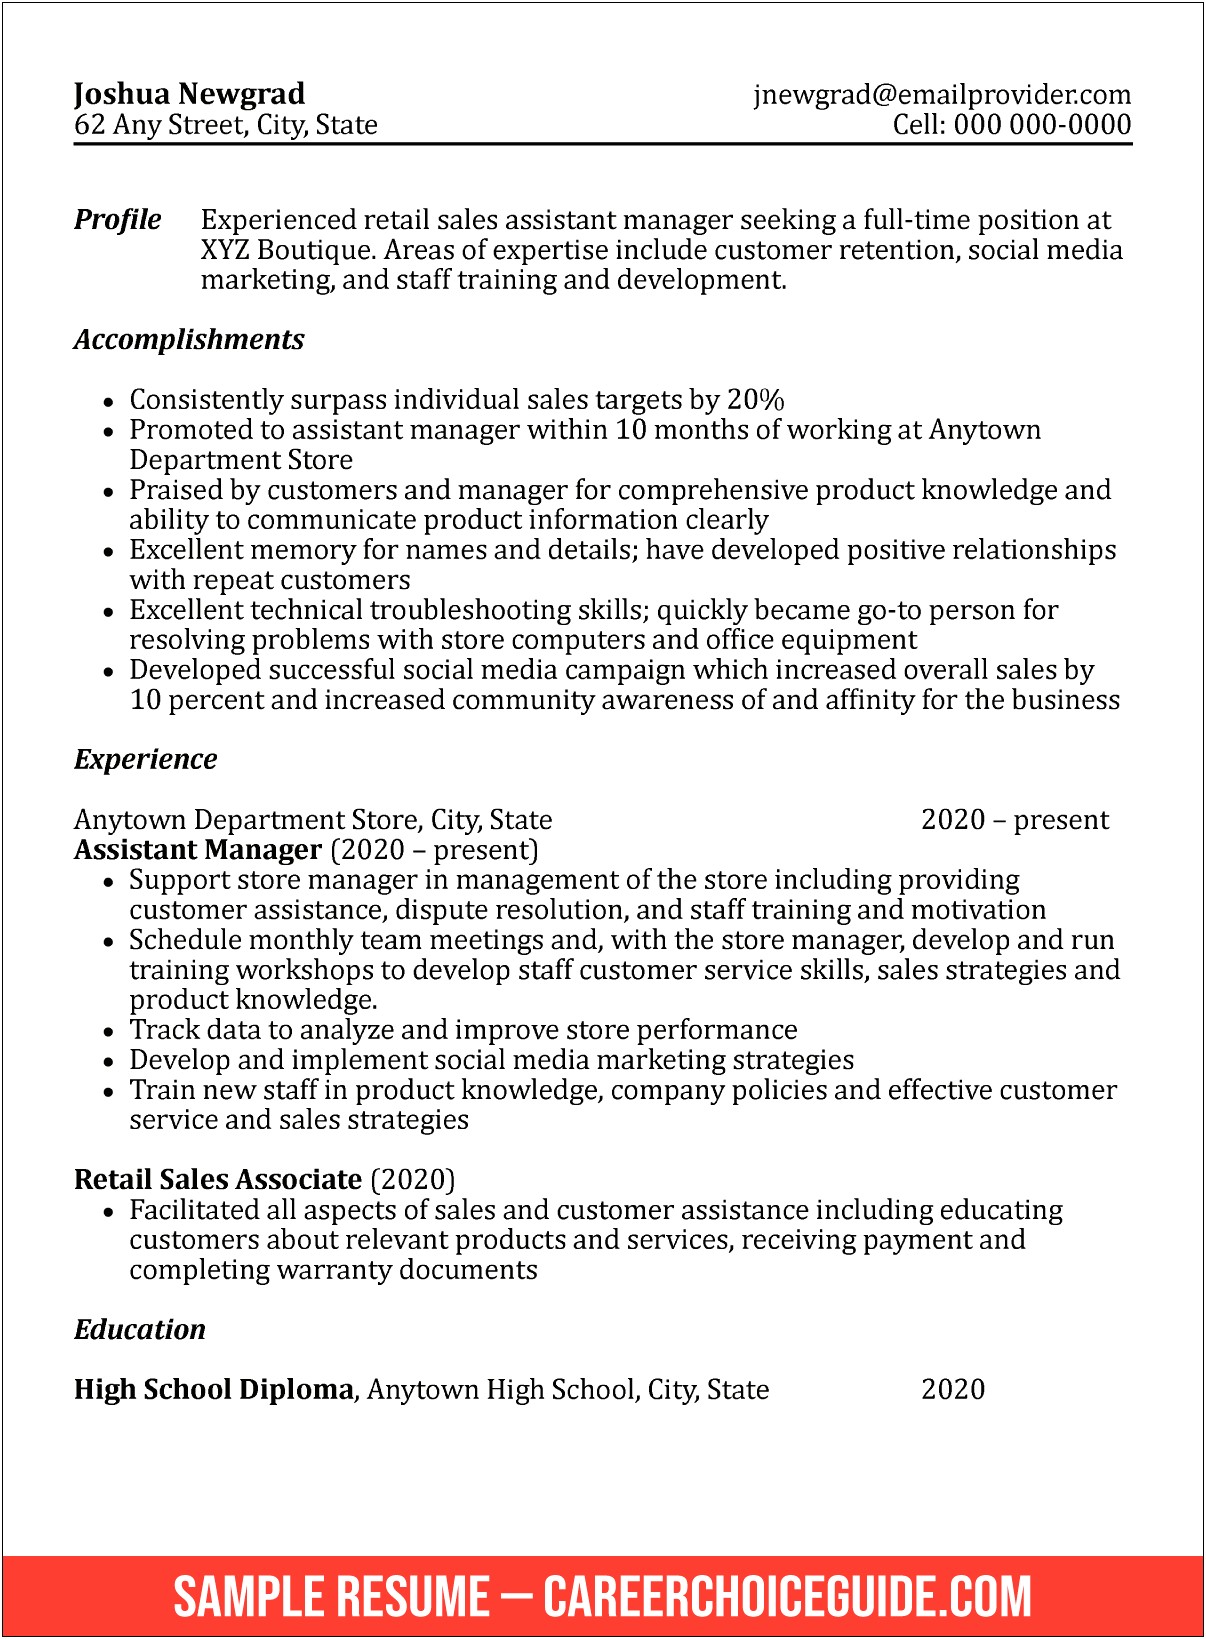 Resume For Job Recent High School Grad